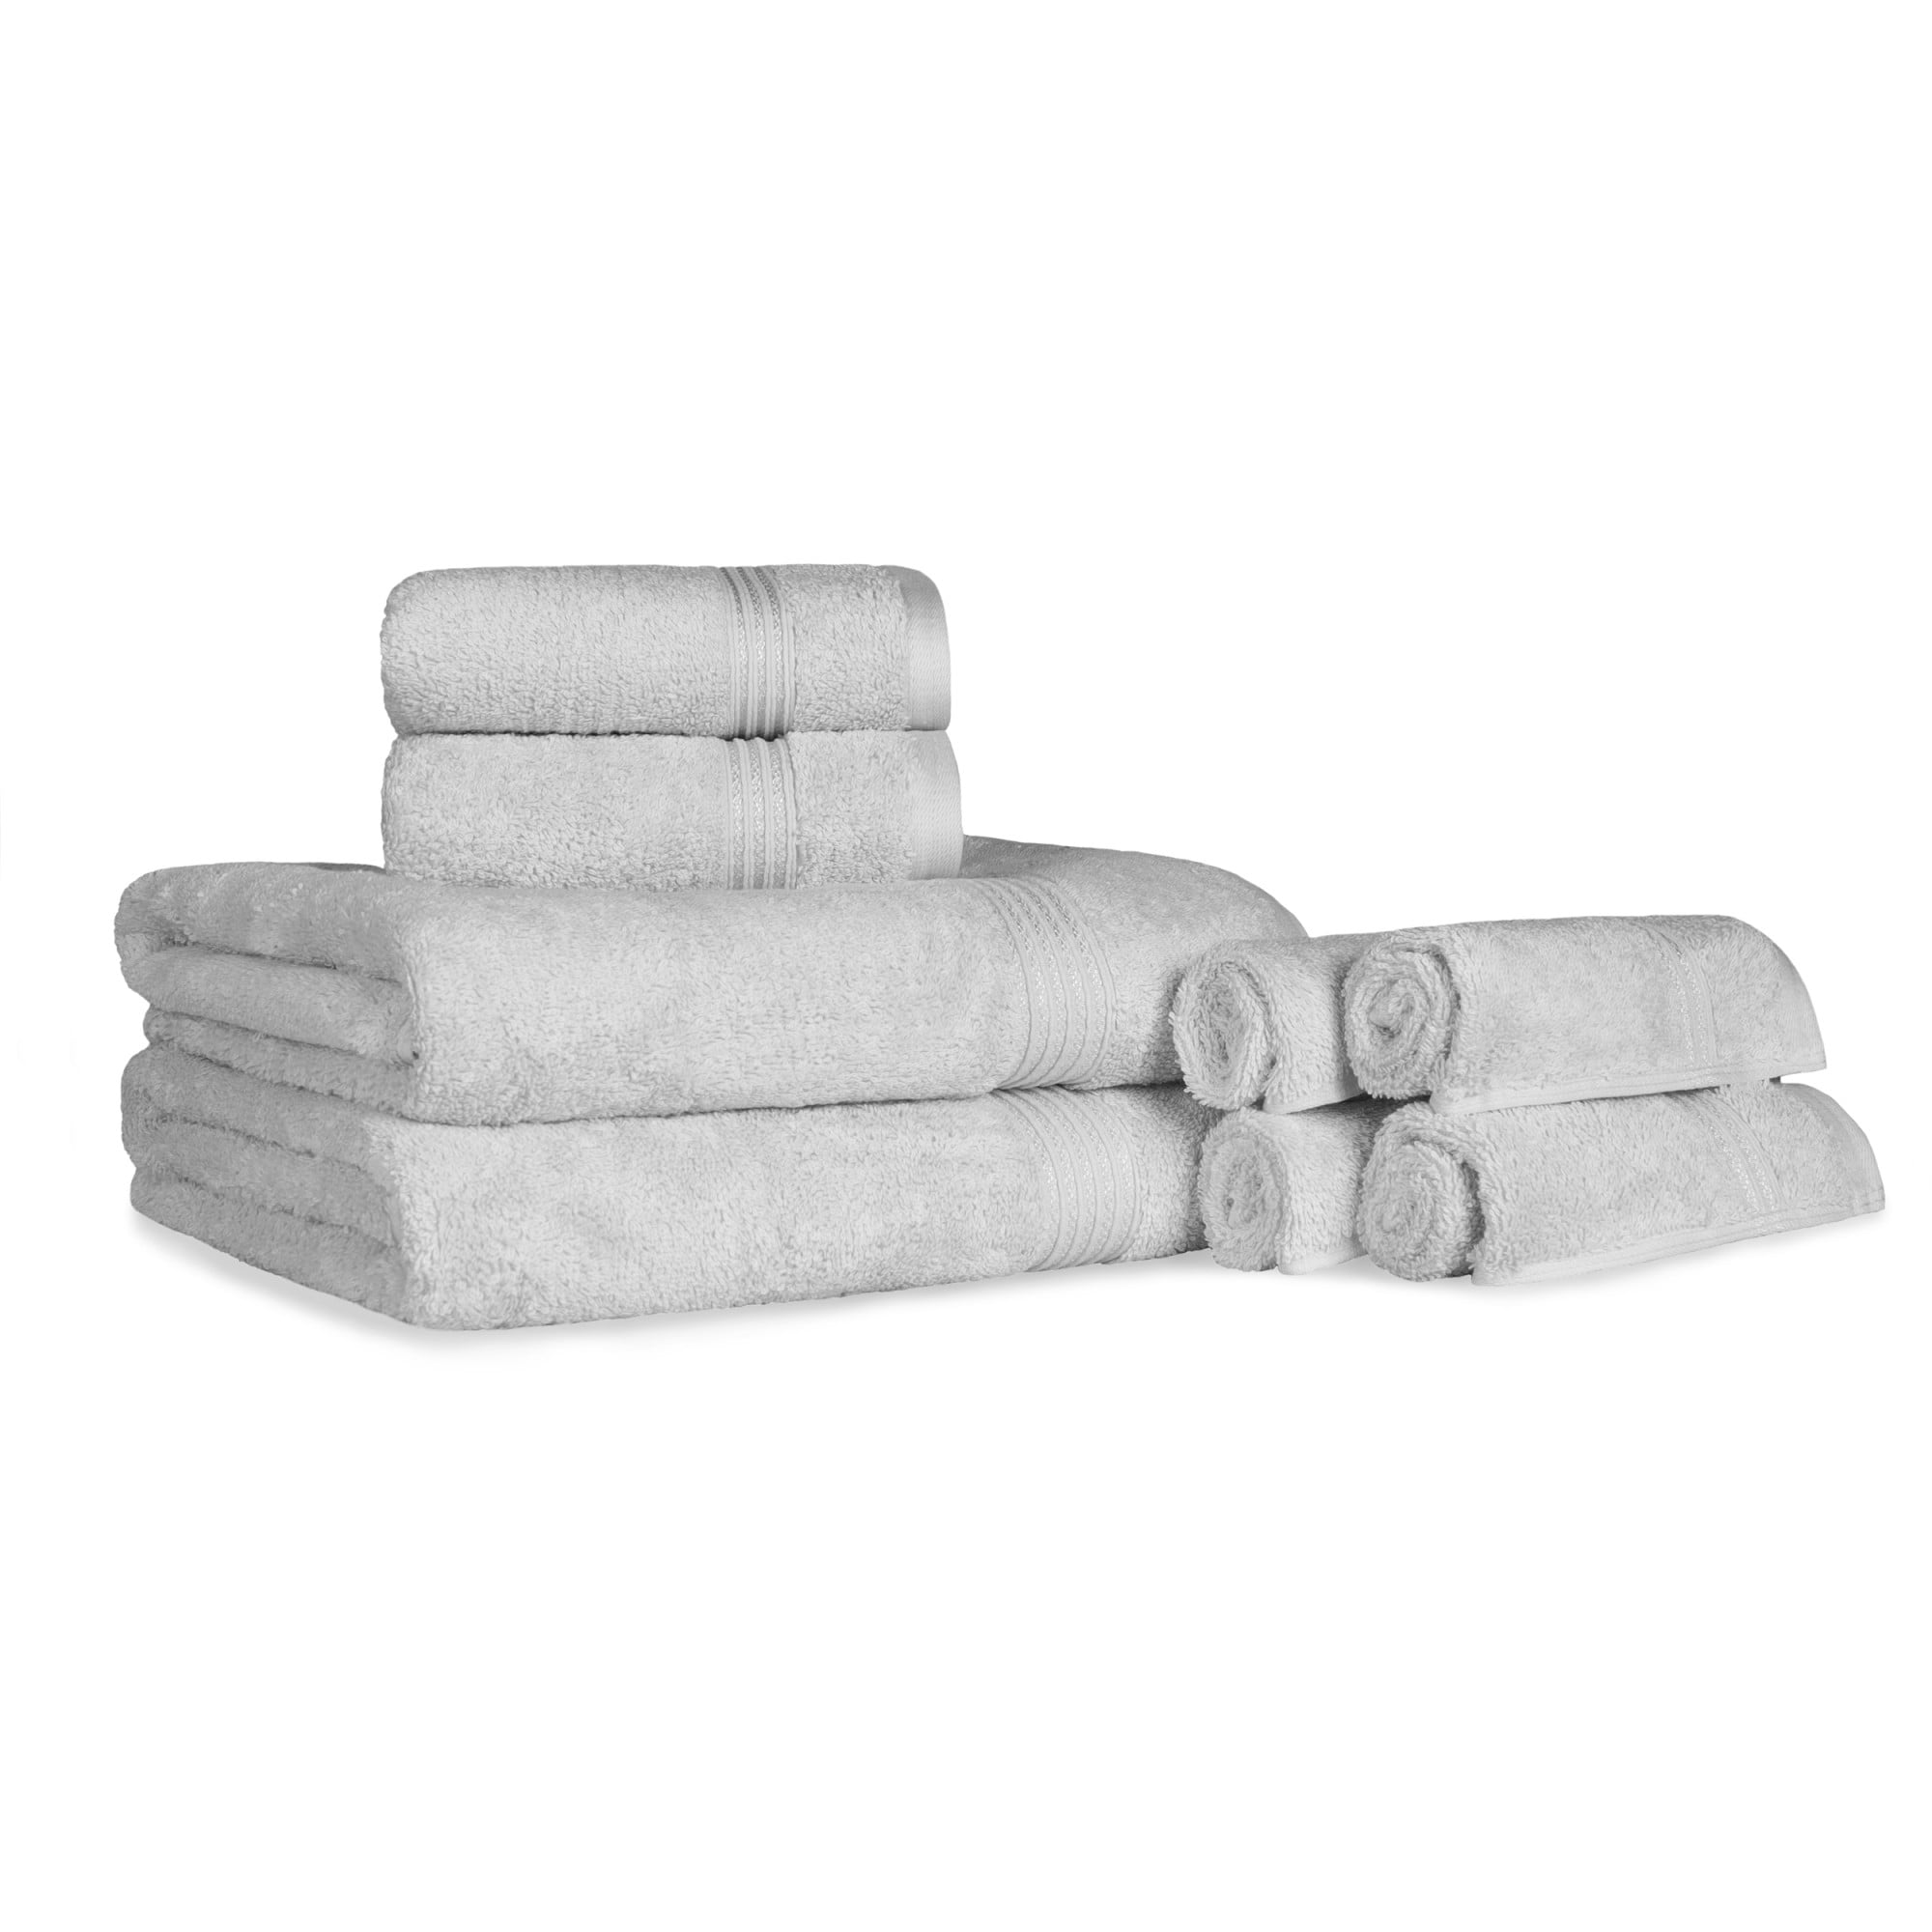 4-pc Taupe Superior 600 GSM Egyptian Cotton Bath Towel Set 